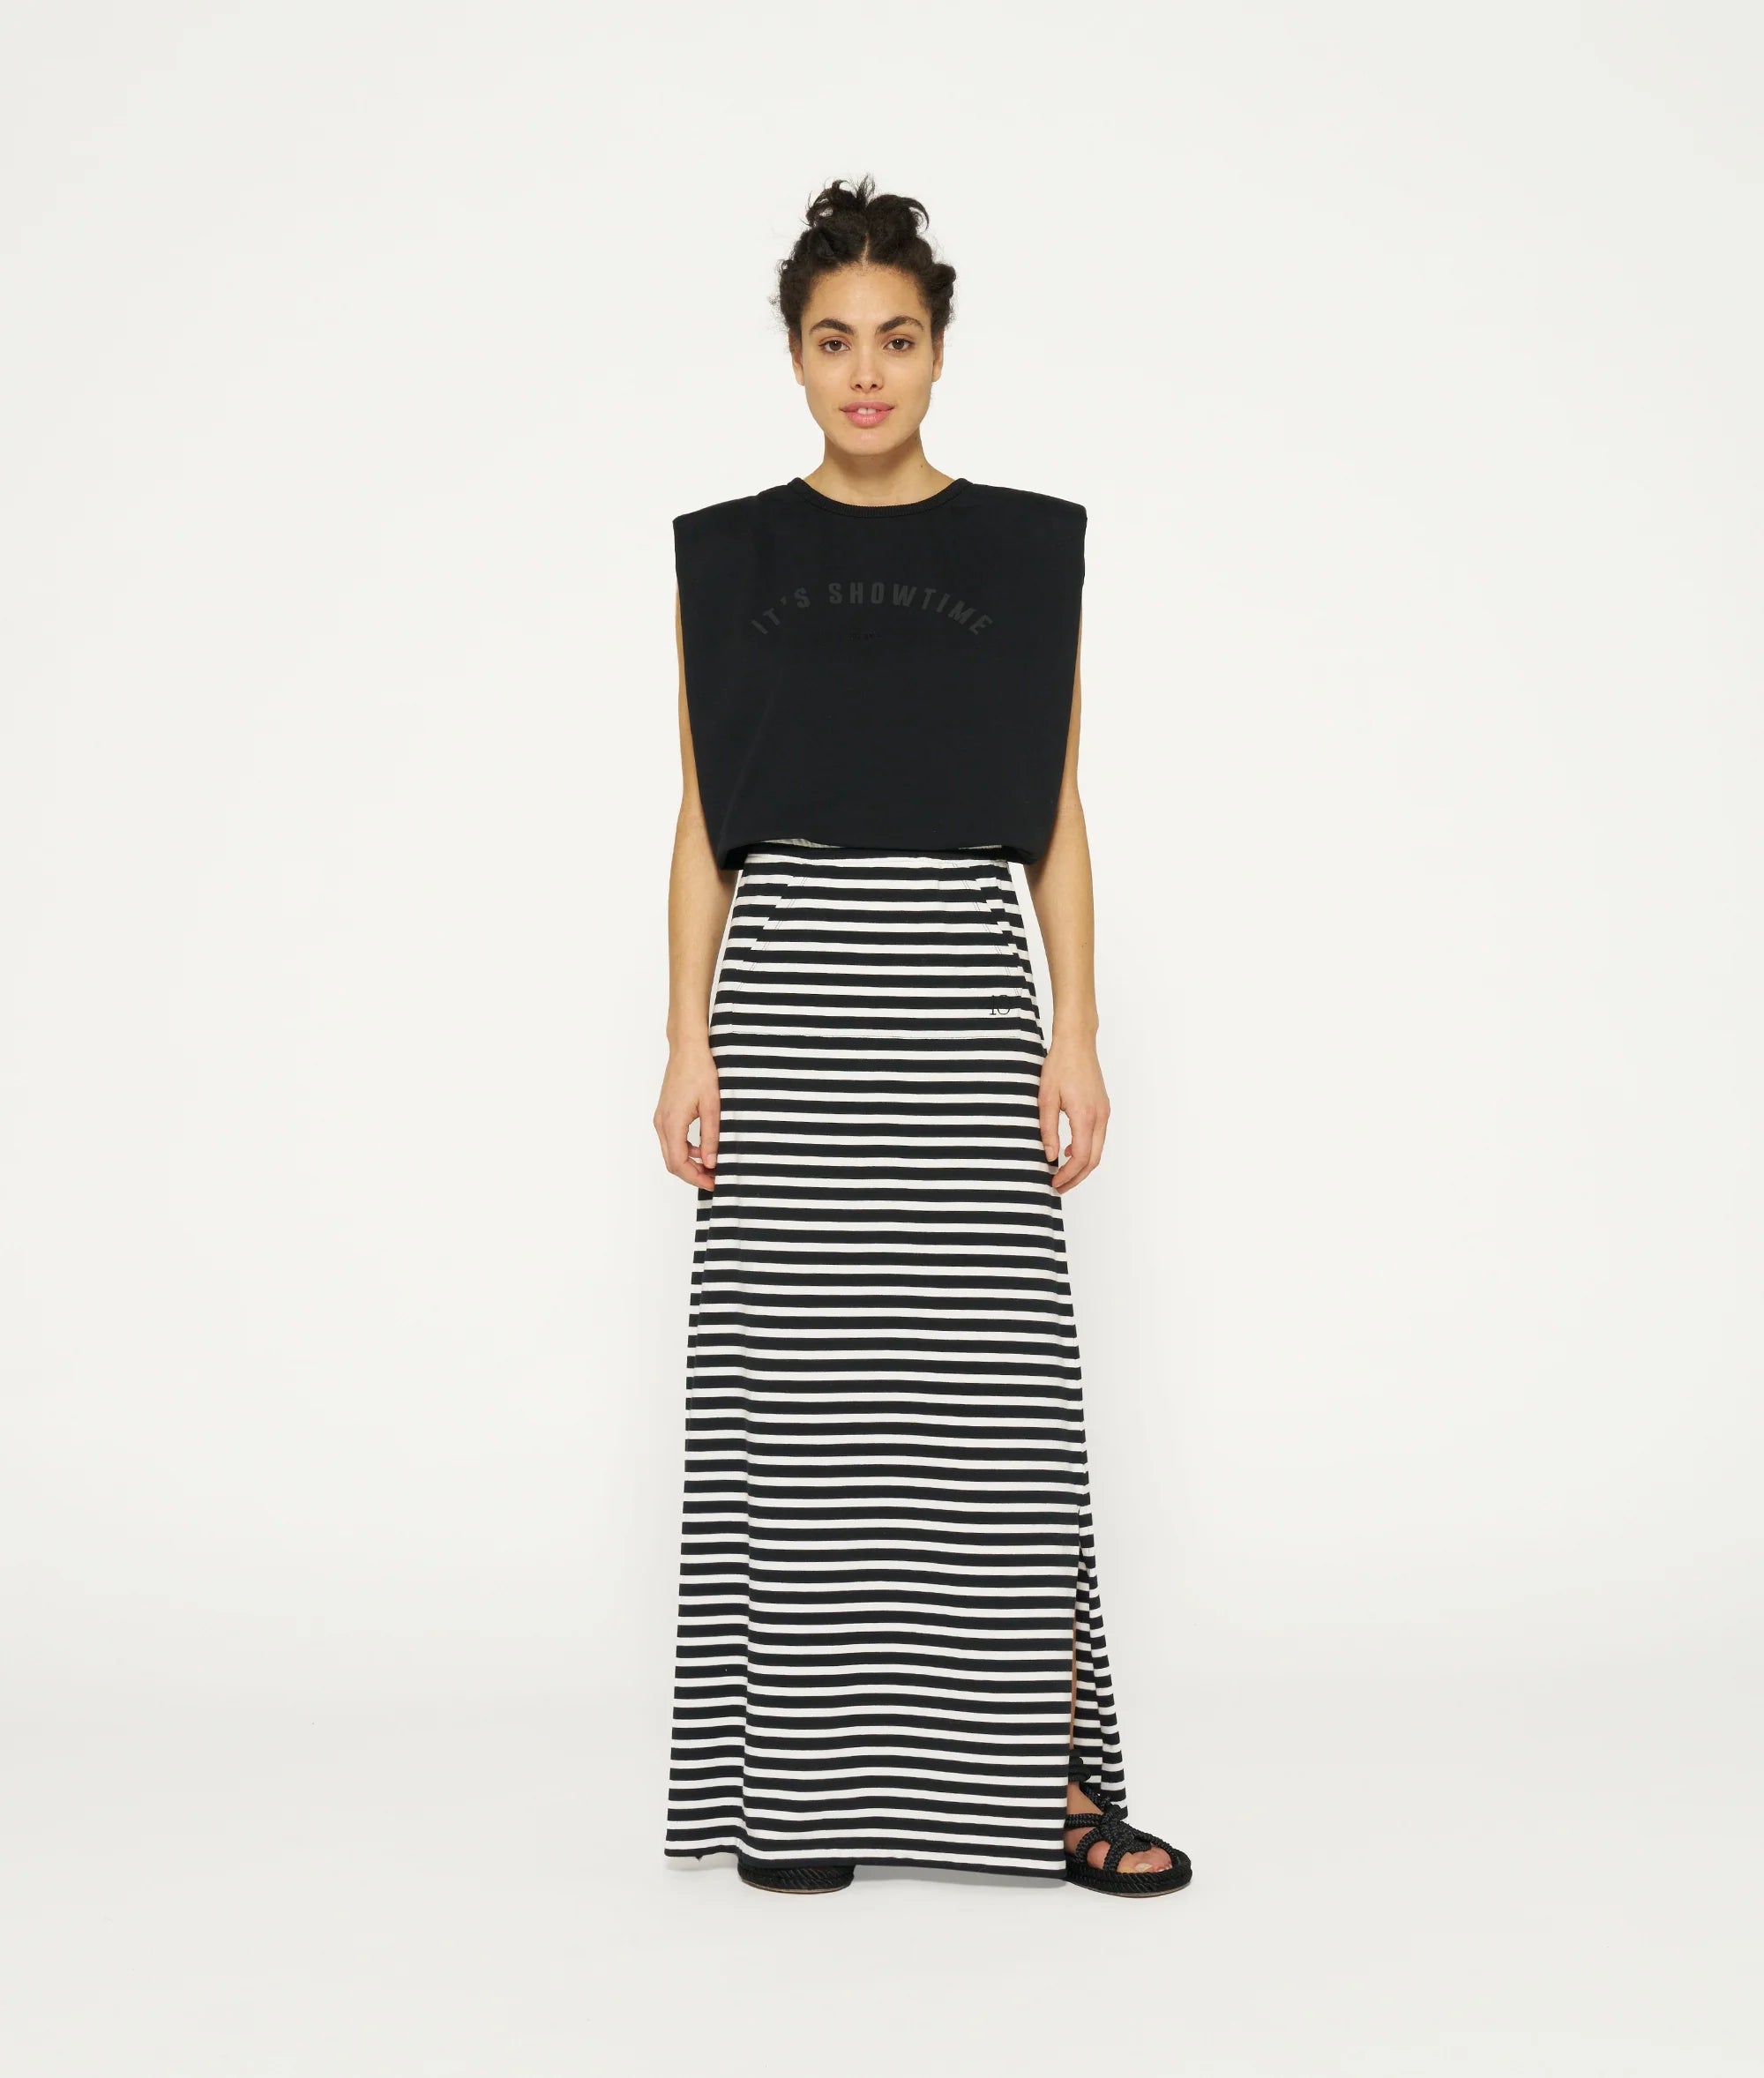 Long skirt stripes black/ecru - 10 days